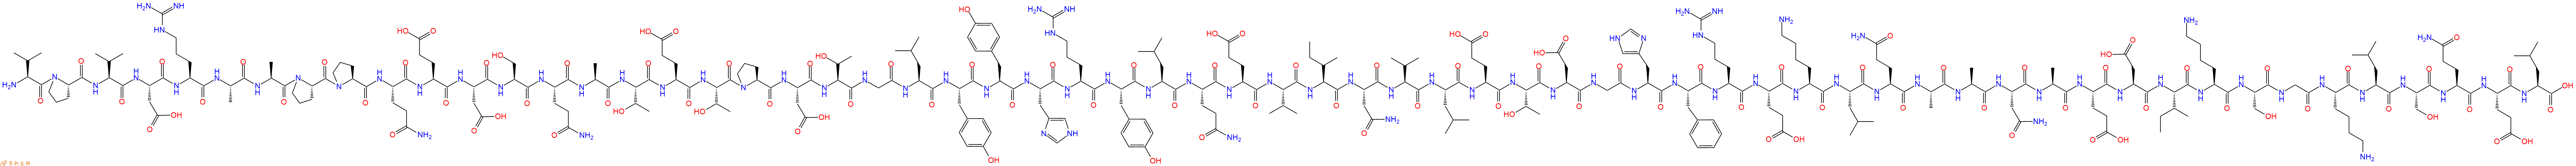 专肽生物产品Nesfatin蛋白片段 Nesfatin-1-Like Peptide (mouse)